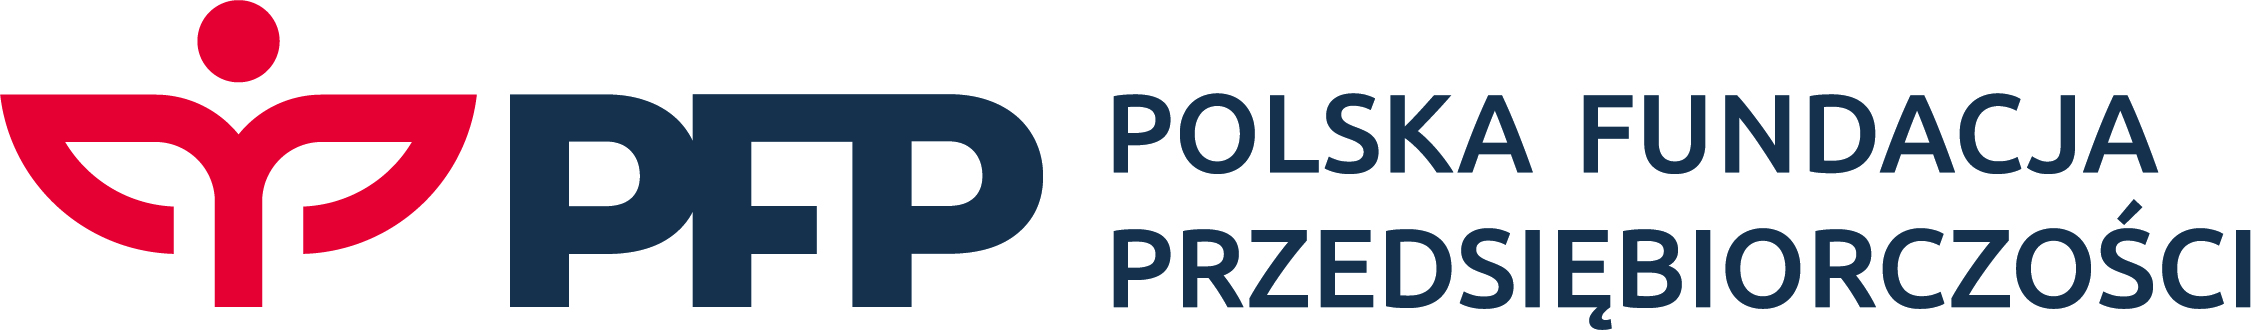 PFP logo